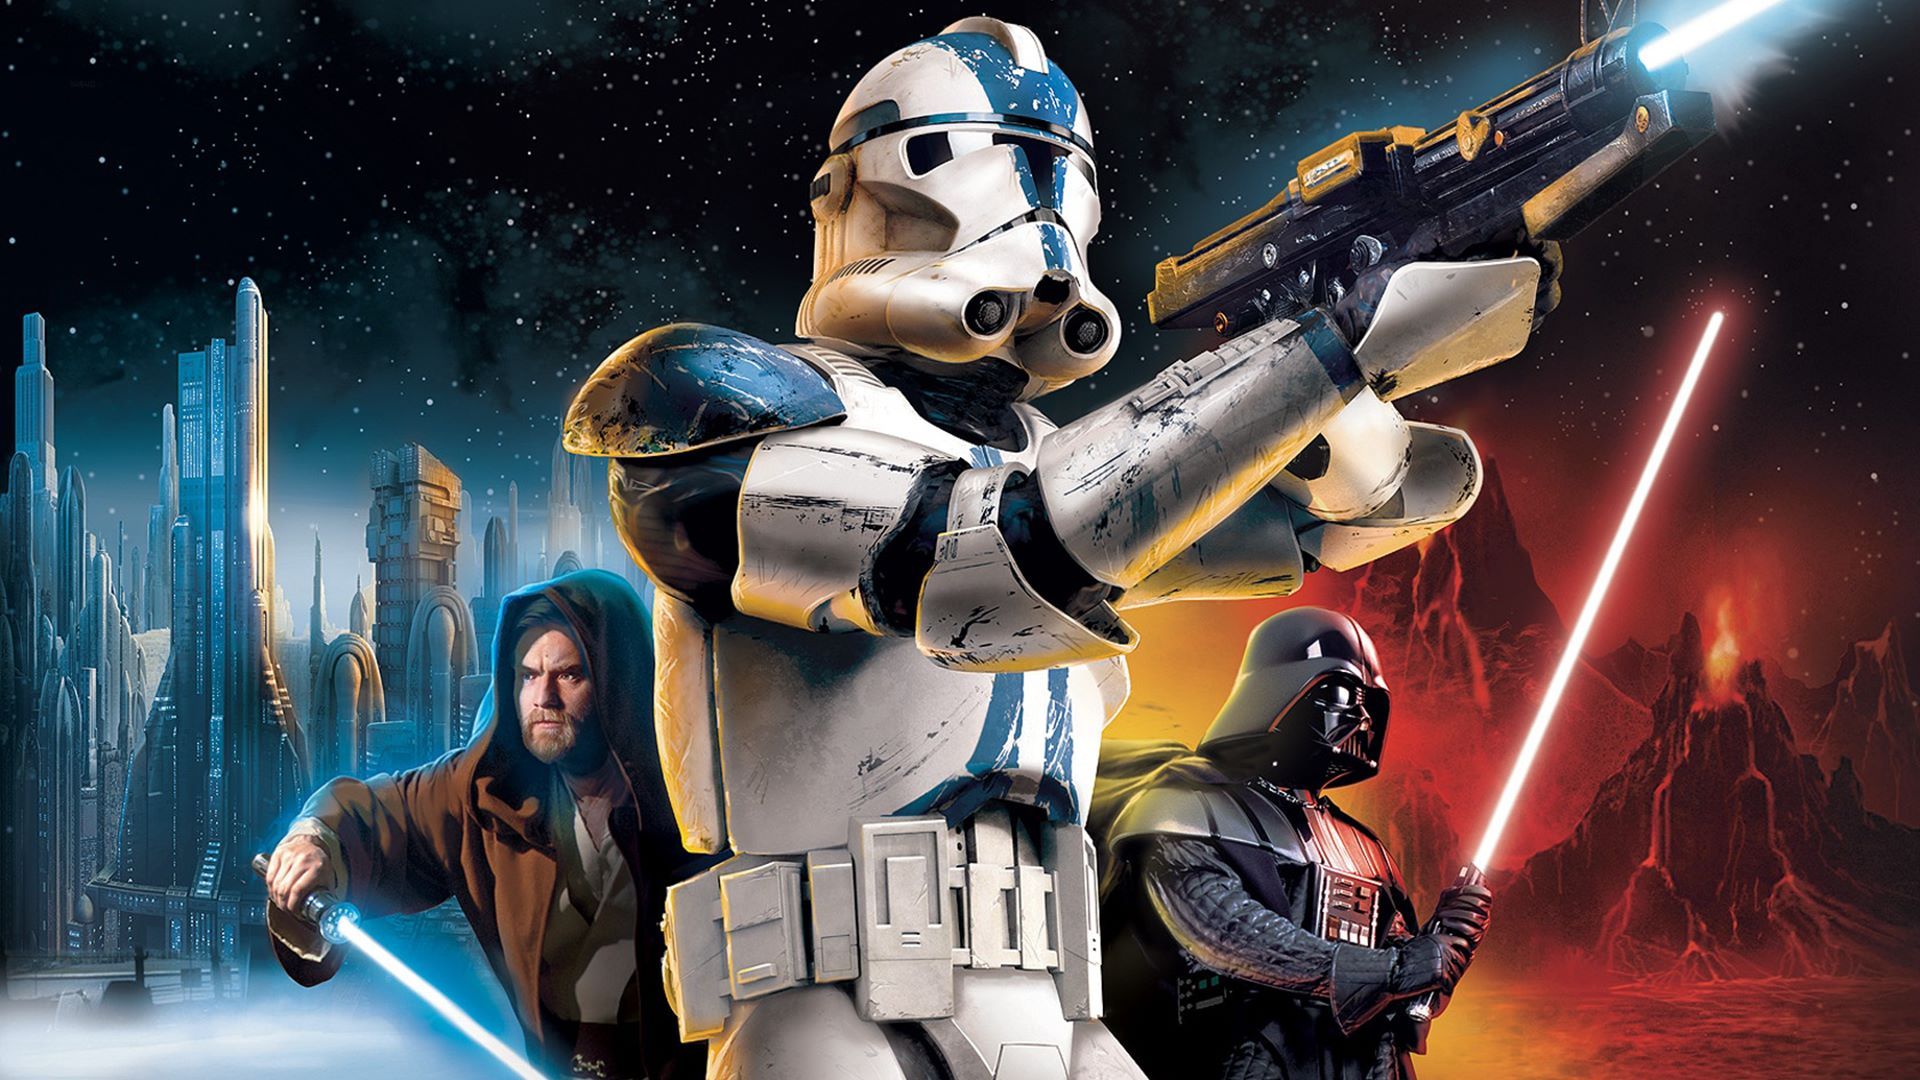 bang Spanning genade 10 Best Star Wars Games Ranked - Top Star Wars Video Gaming Titles